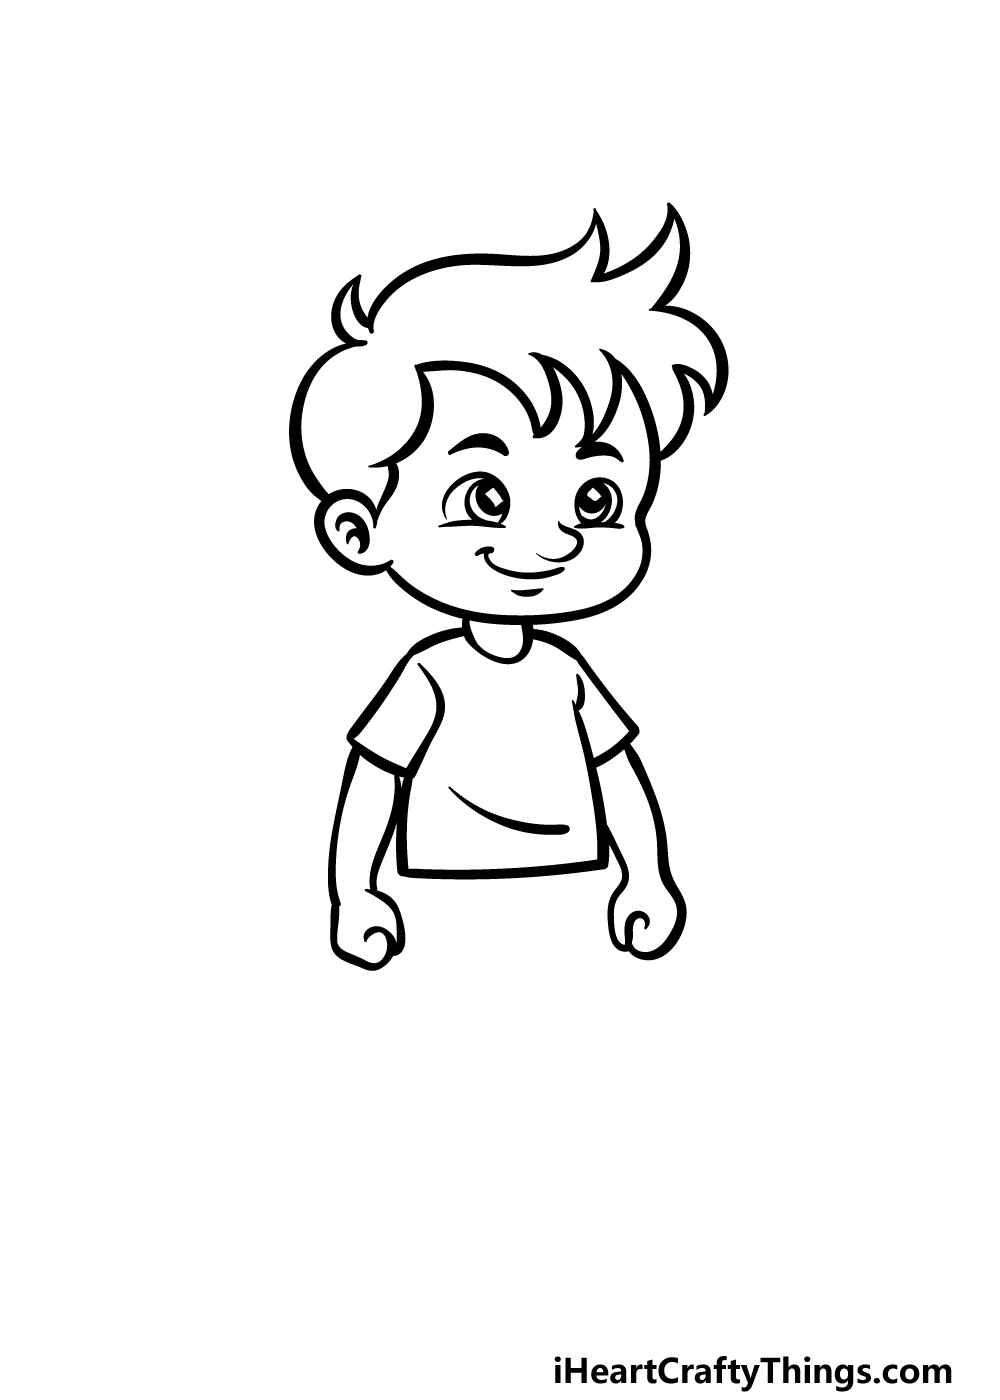 Cute boy sketch by moreasian on DeviantArt